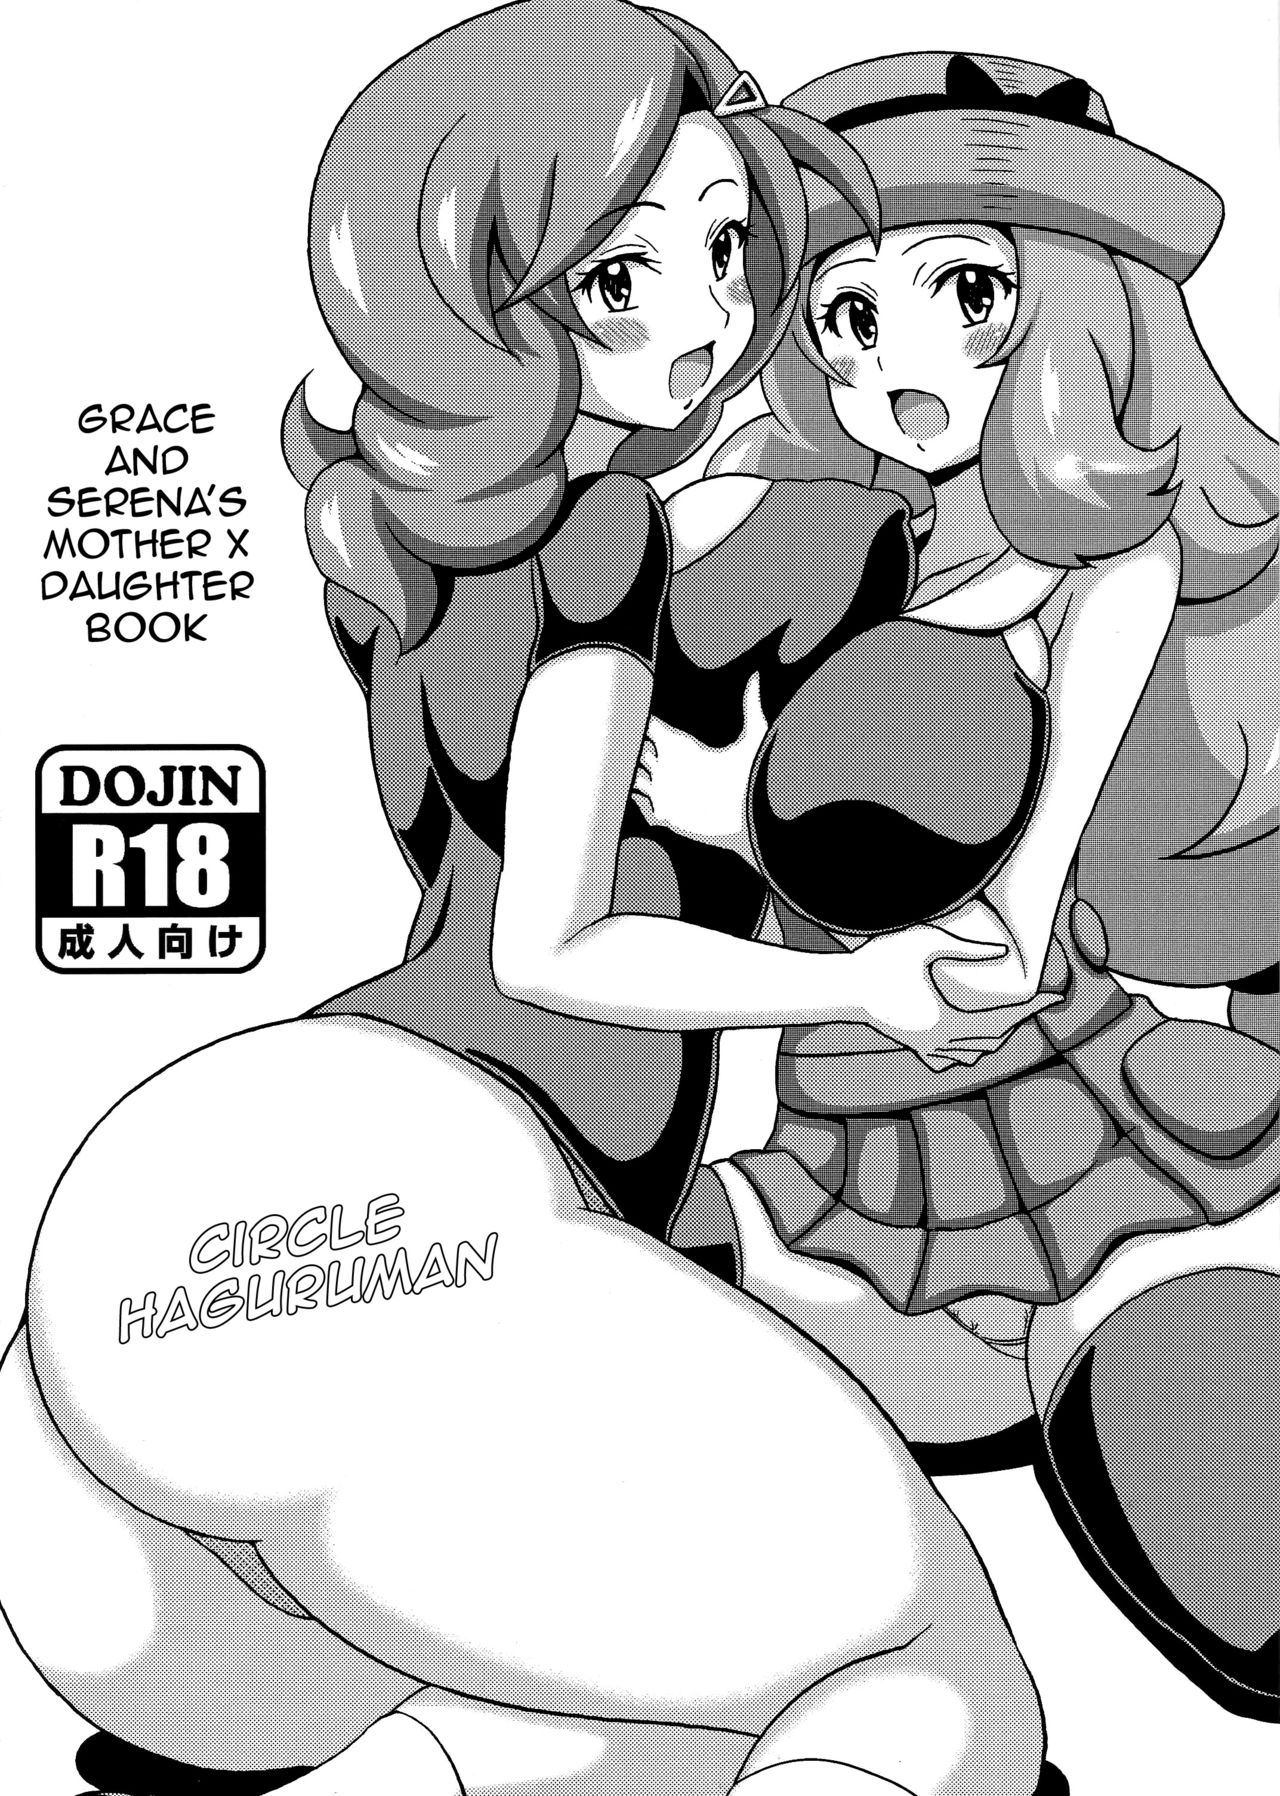 Pokemon Porn Stockings - Read âŒstockings âŒ Porn comics Â» Page 7393 of 7793 Â» Hentai porns - Manga  and porncomics xxx 7393 hentai comics